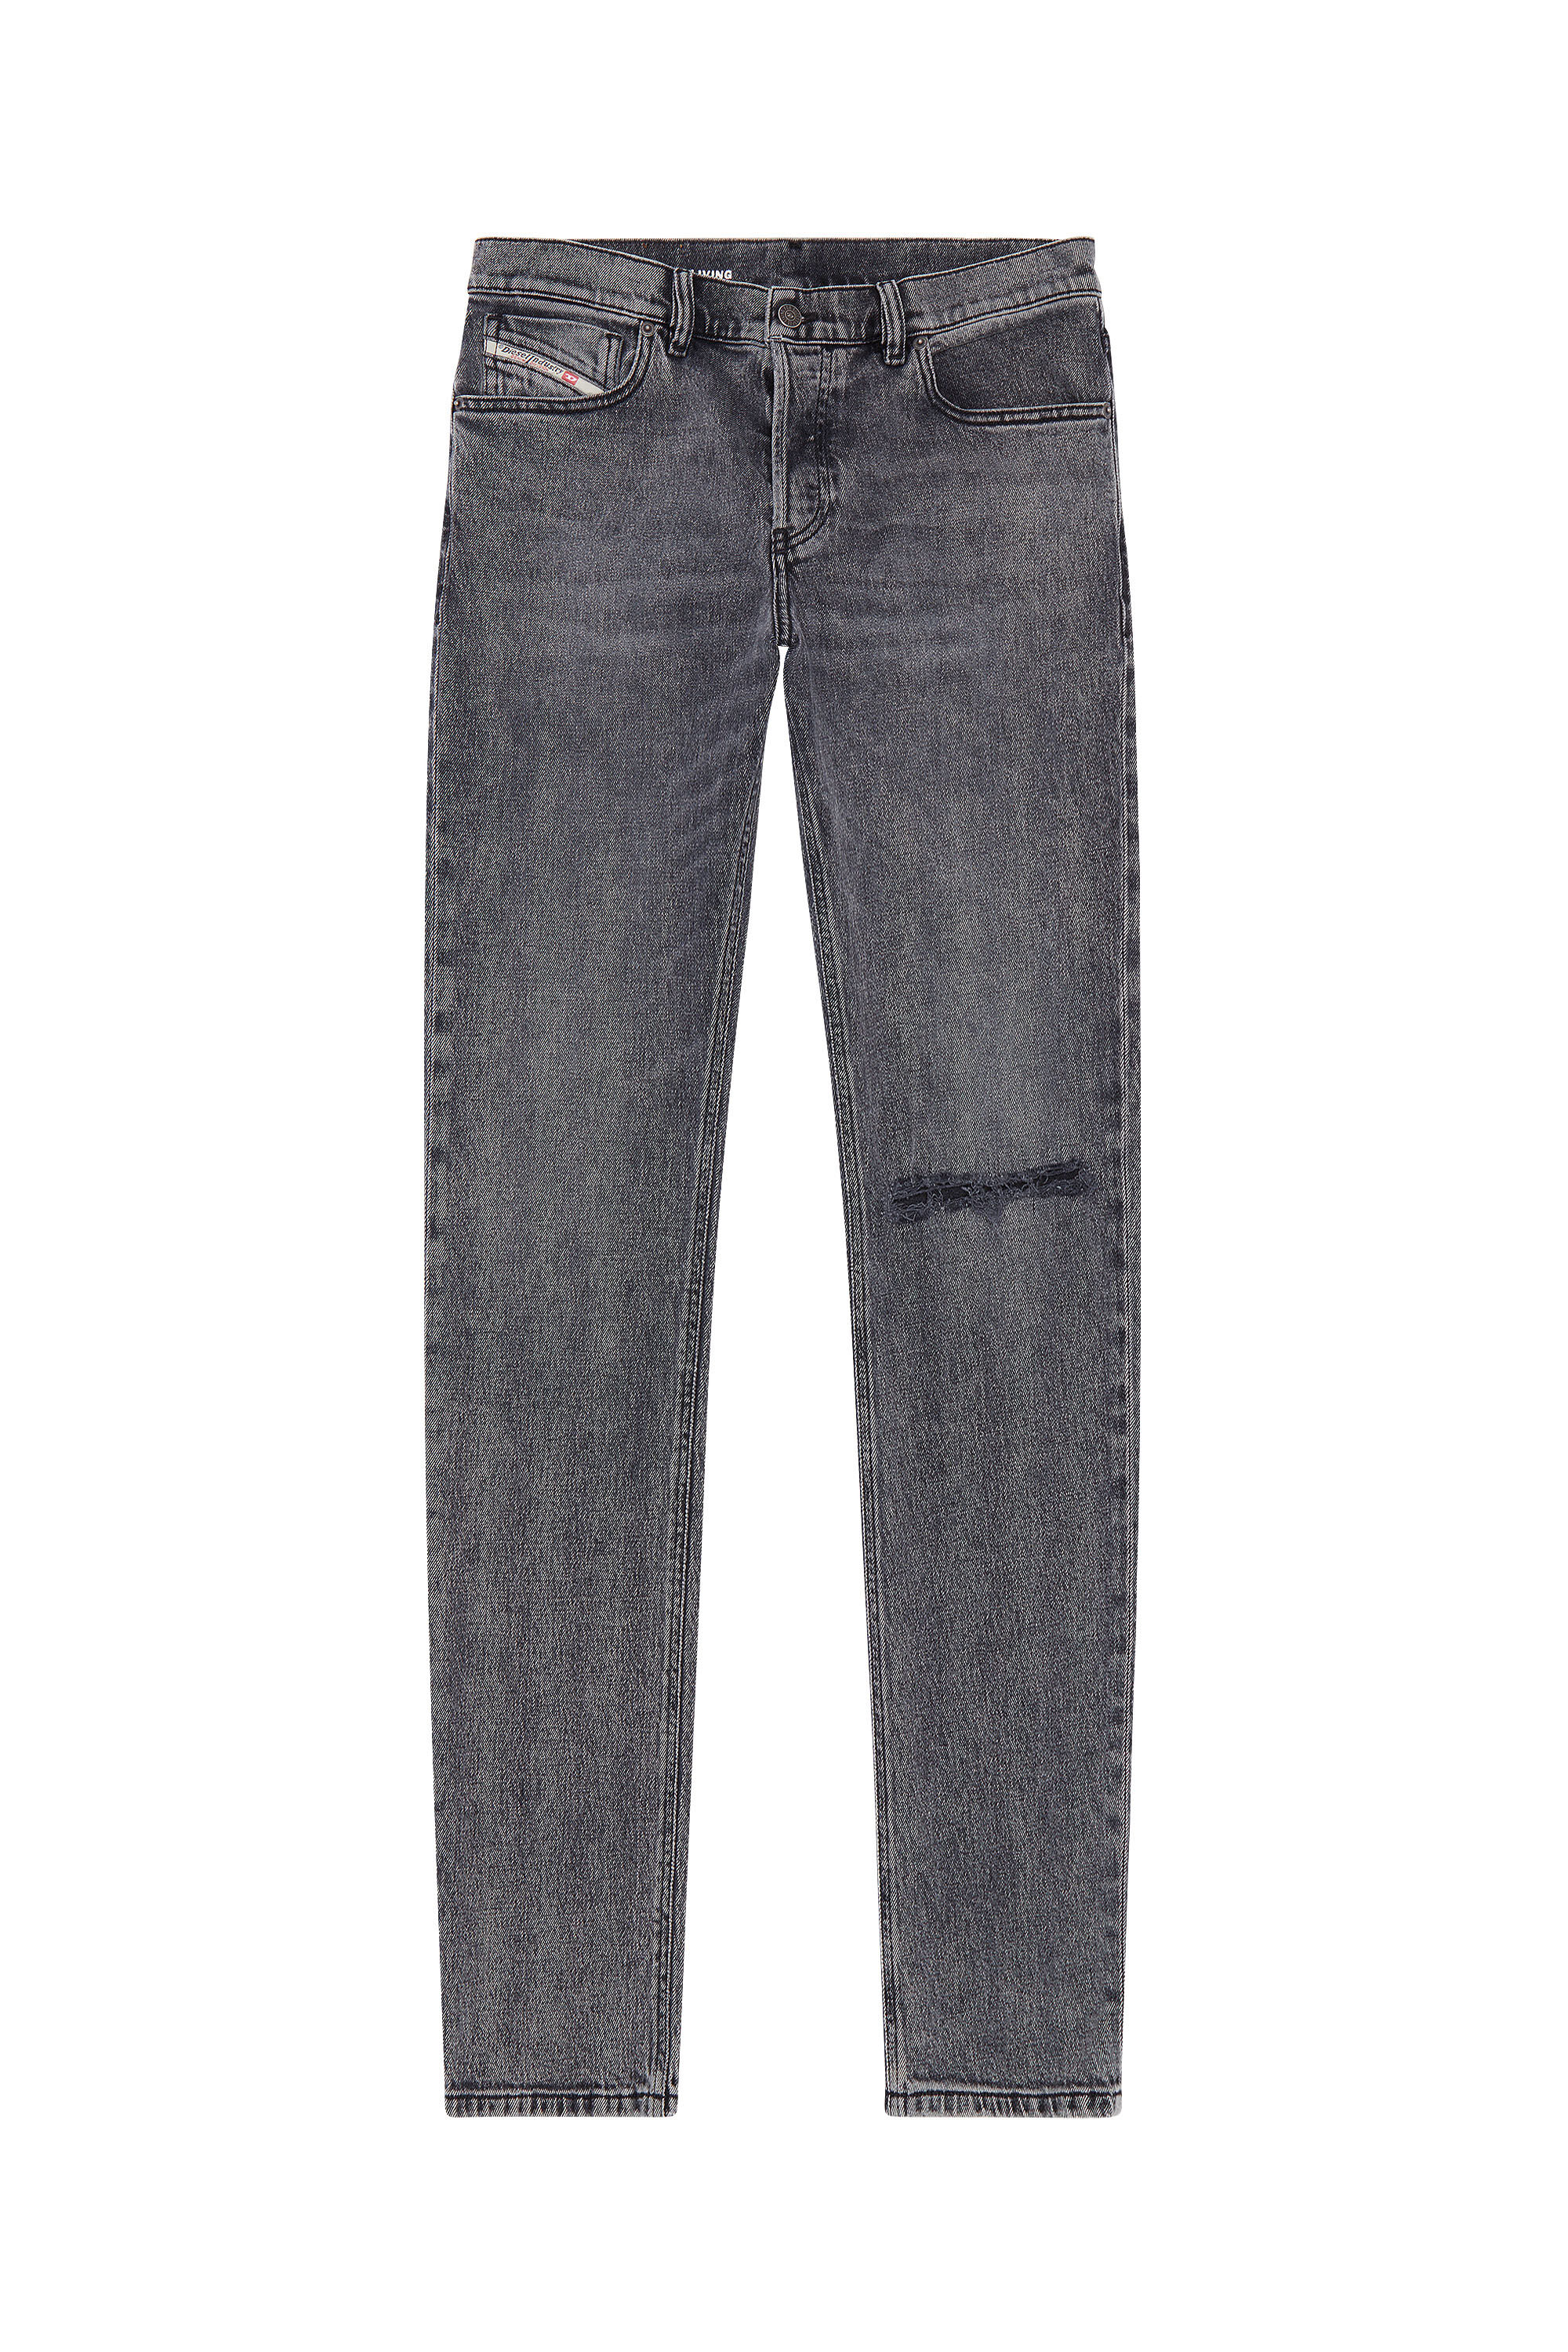 Men's Straight Jeans | Grey | Diesel 1995 D-Sark